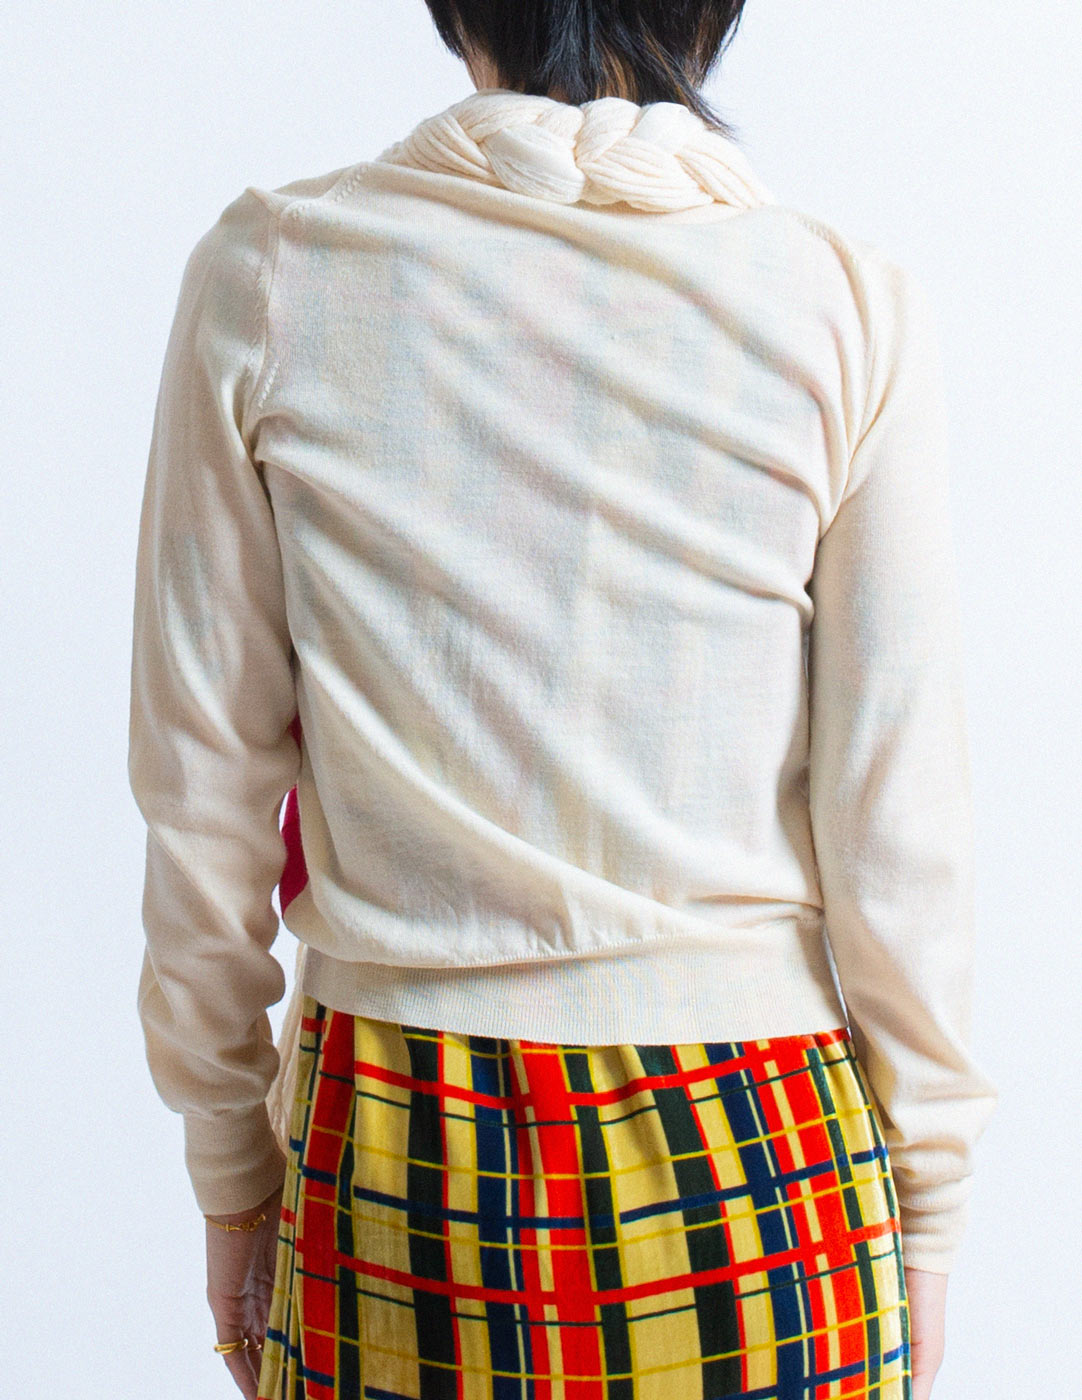 Comme des Garçons vintage argyle wool cardigan with attached braid back detail